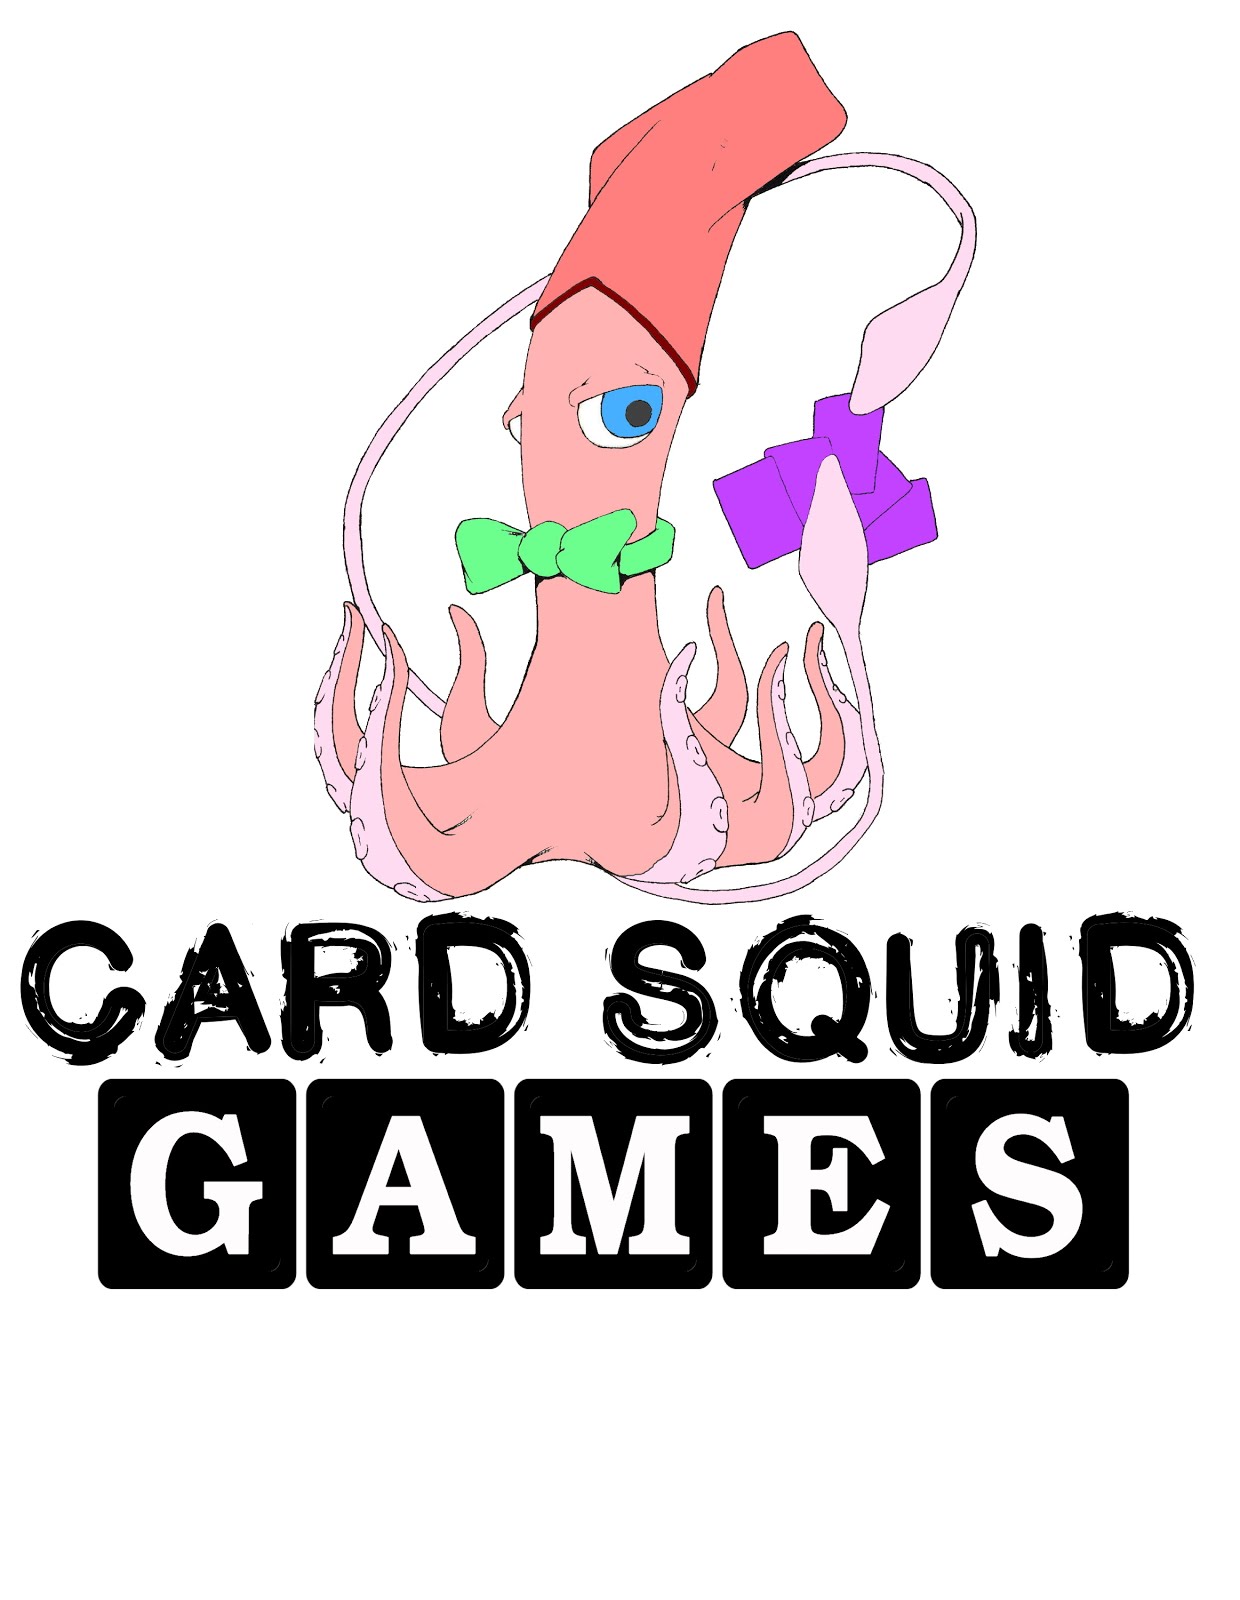 Card Squid Games